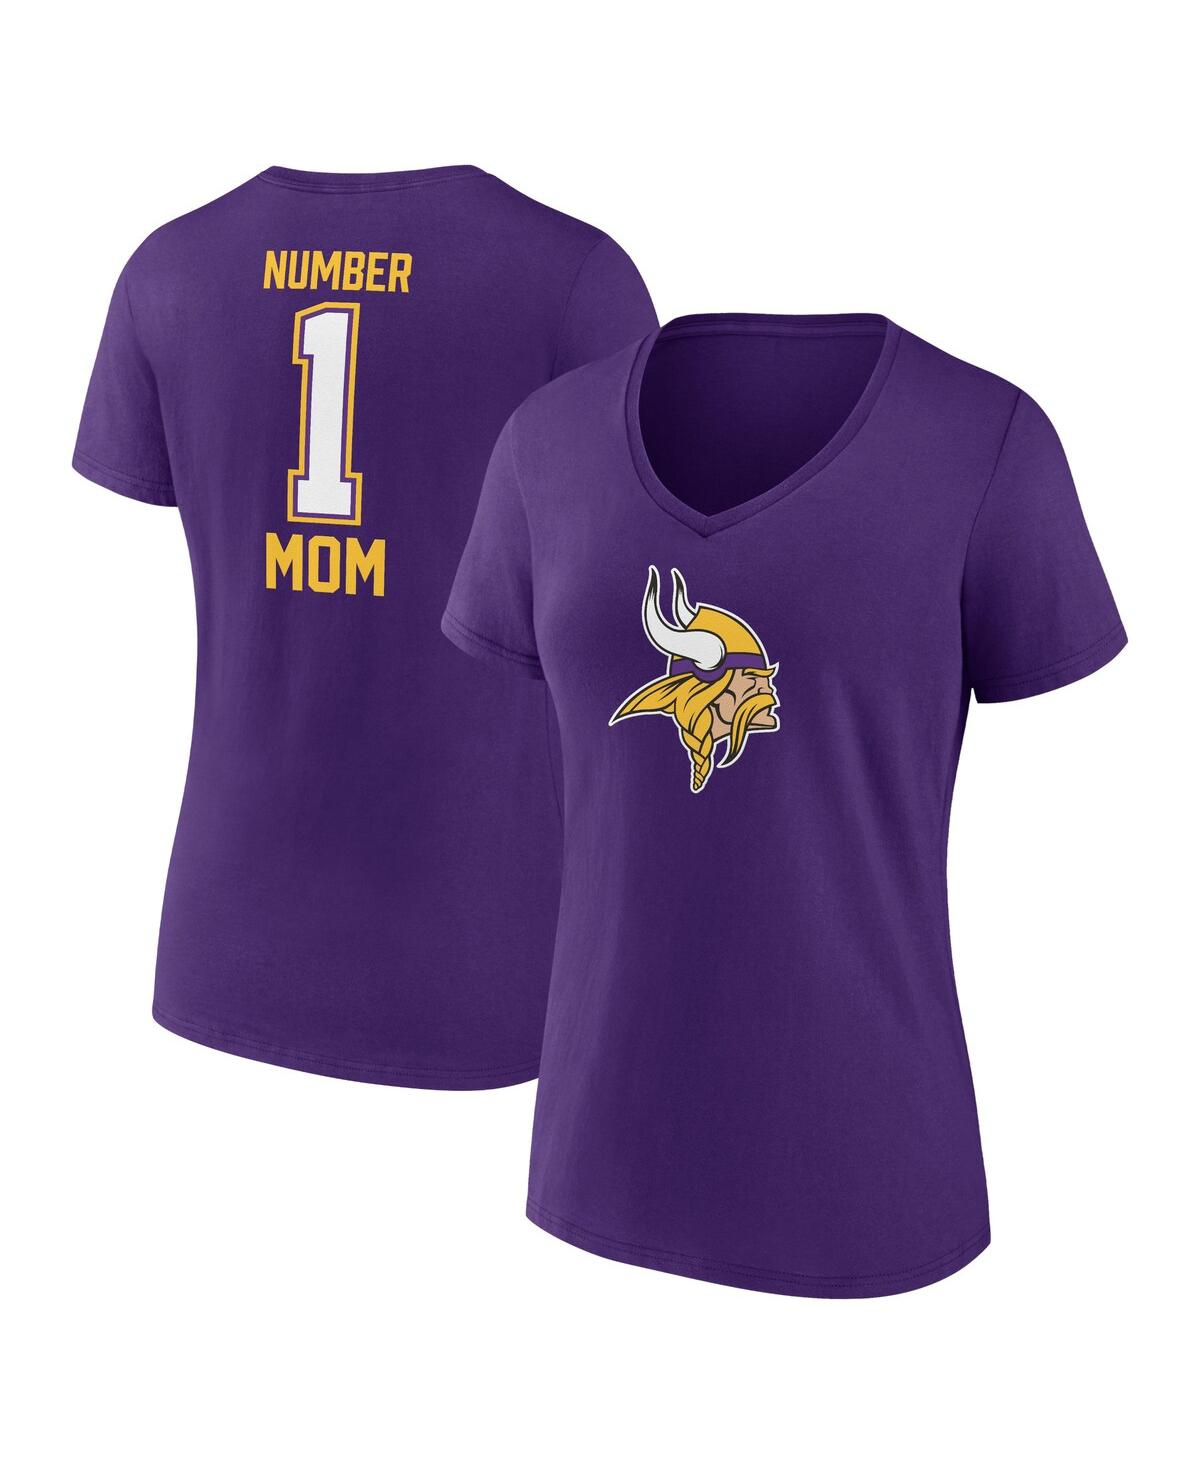 Shop Fanatics Women's Branded Purple Minnesota Vikings Mother's Day V-neck T-shirt